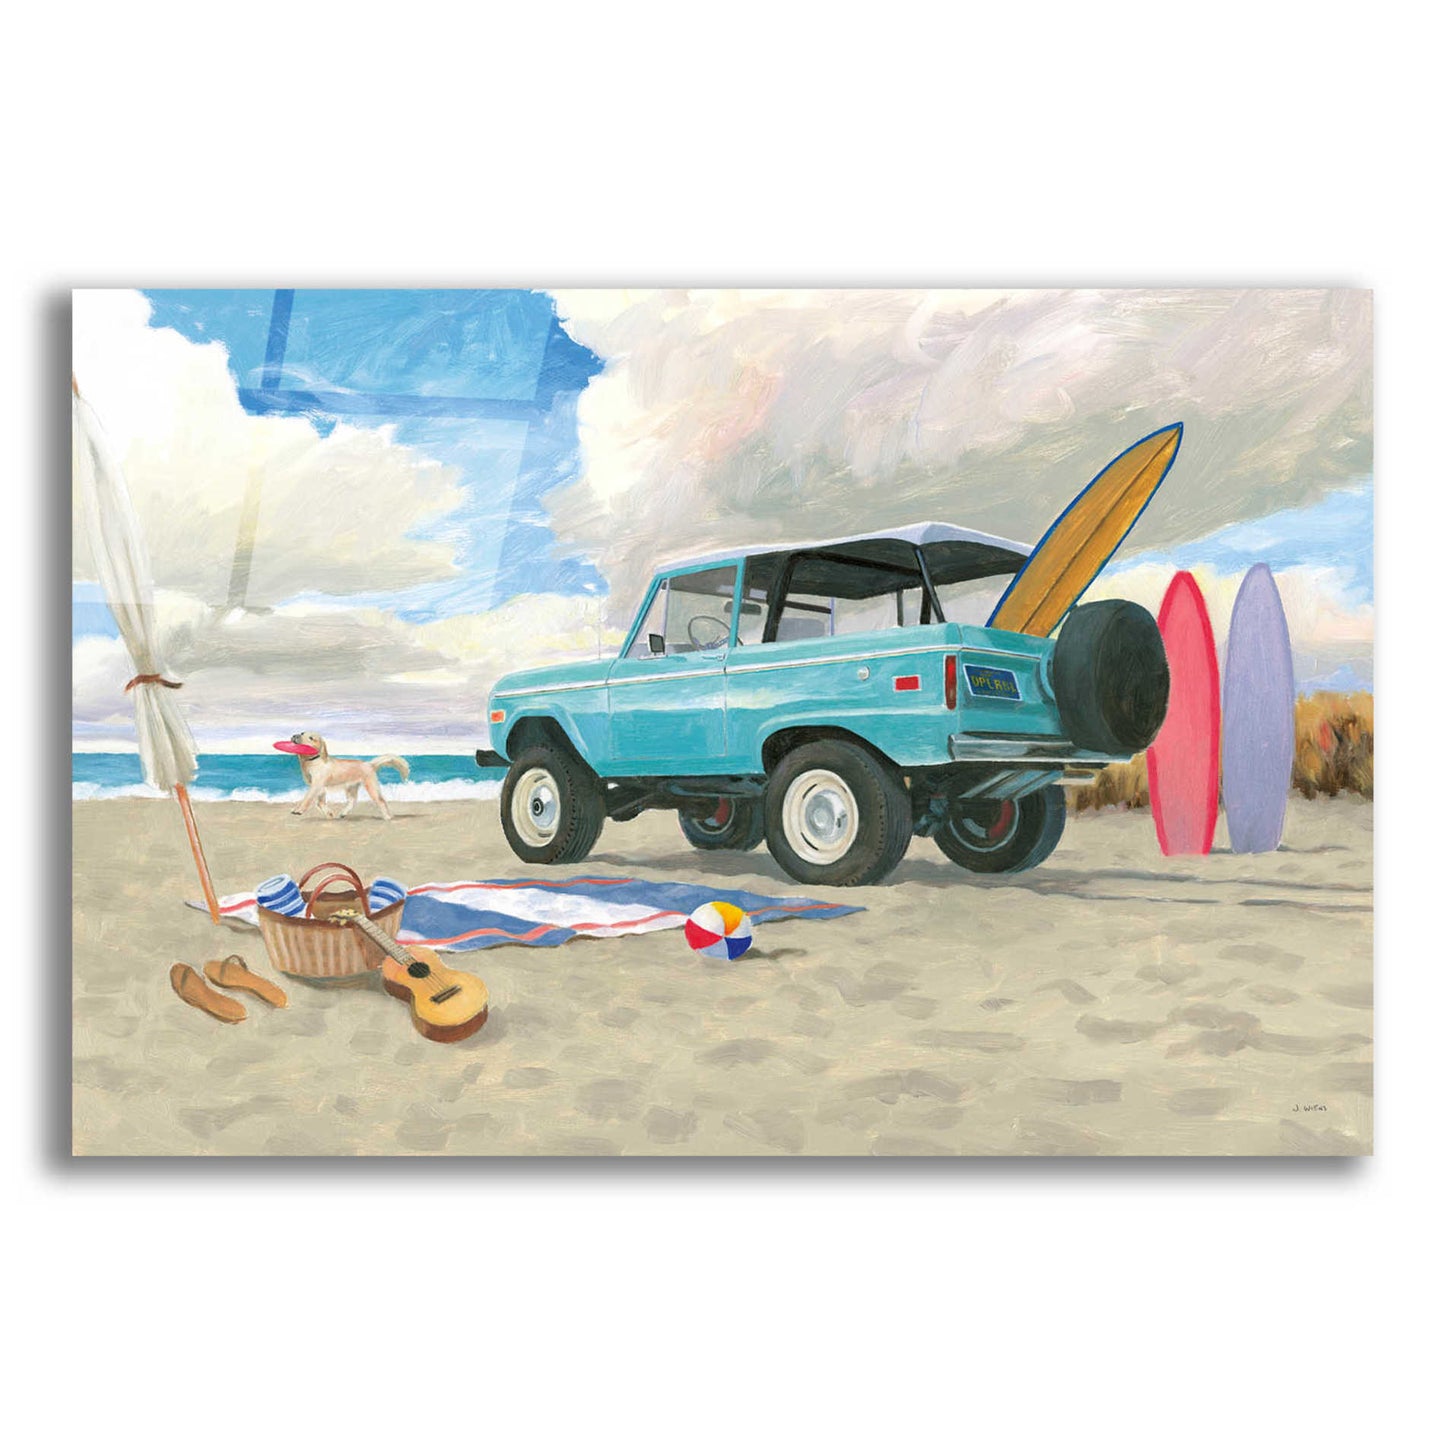 Epic Art 'Beach Ride I' by James Wiens, Acrylic Glass Wall Art,18x12x1.1x0,26x18x1.1x0,40x26x1.74x0,60x40x1.74x0